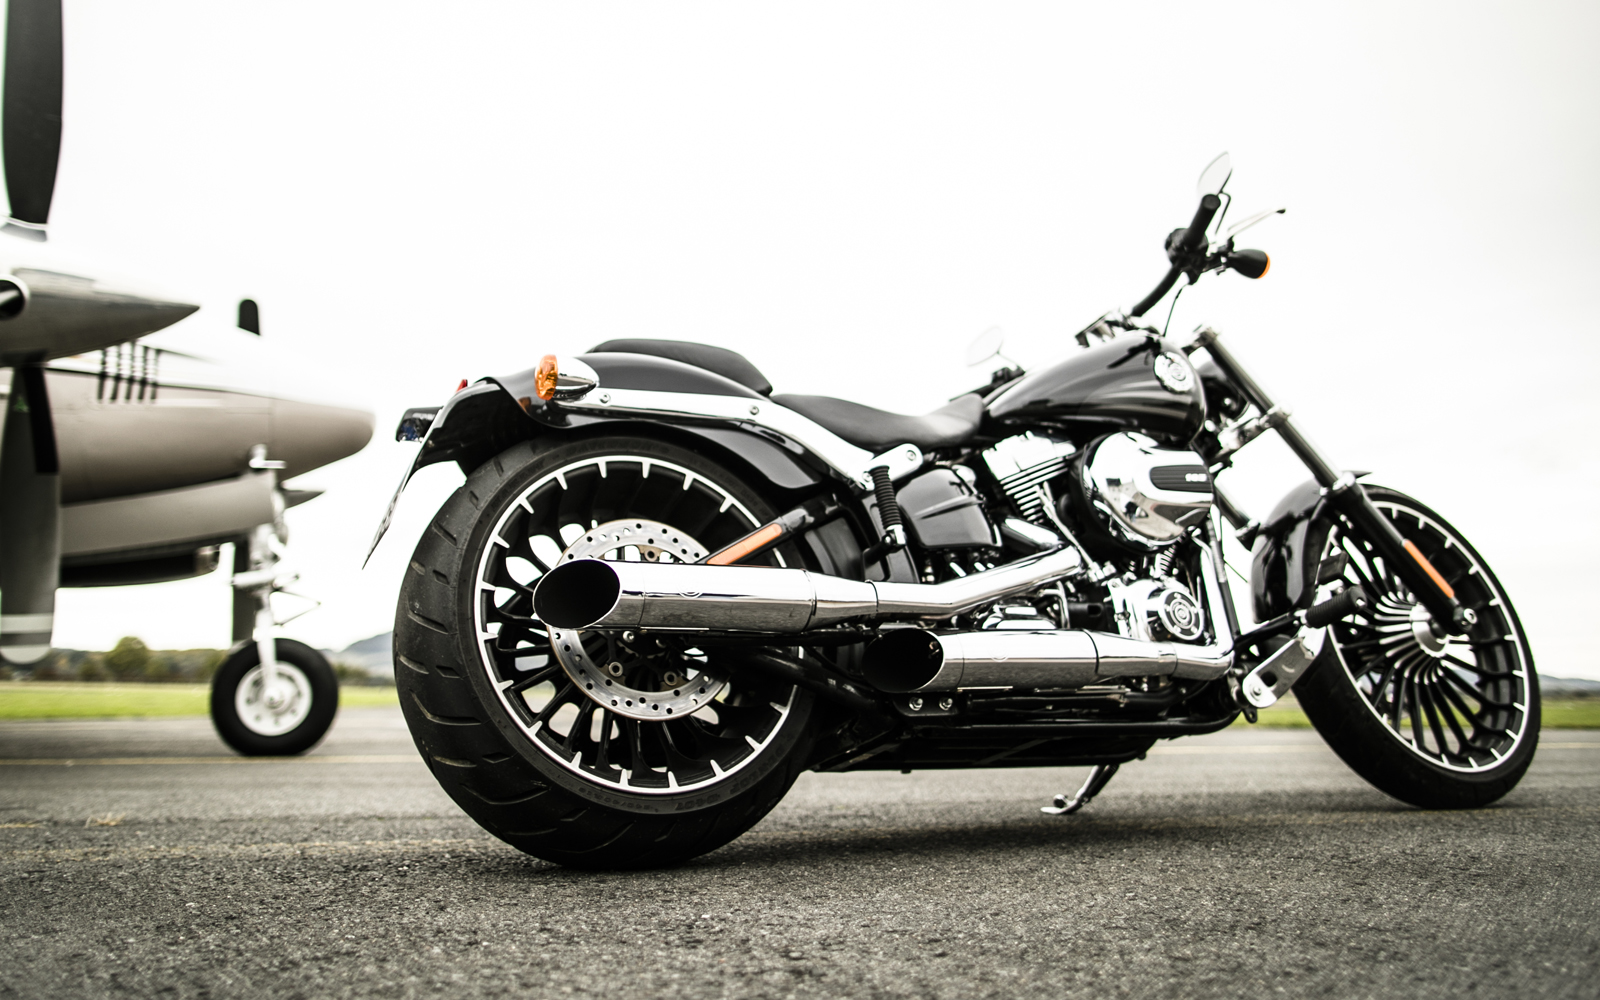 KessTech Adjustable Exhaust System on Harley Davidson